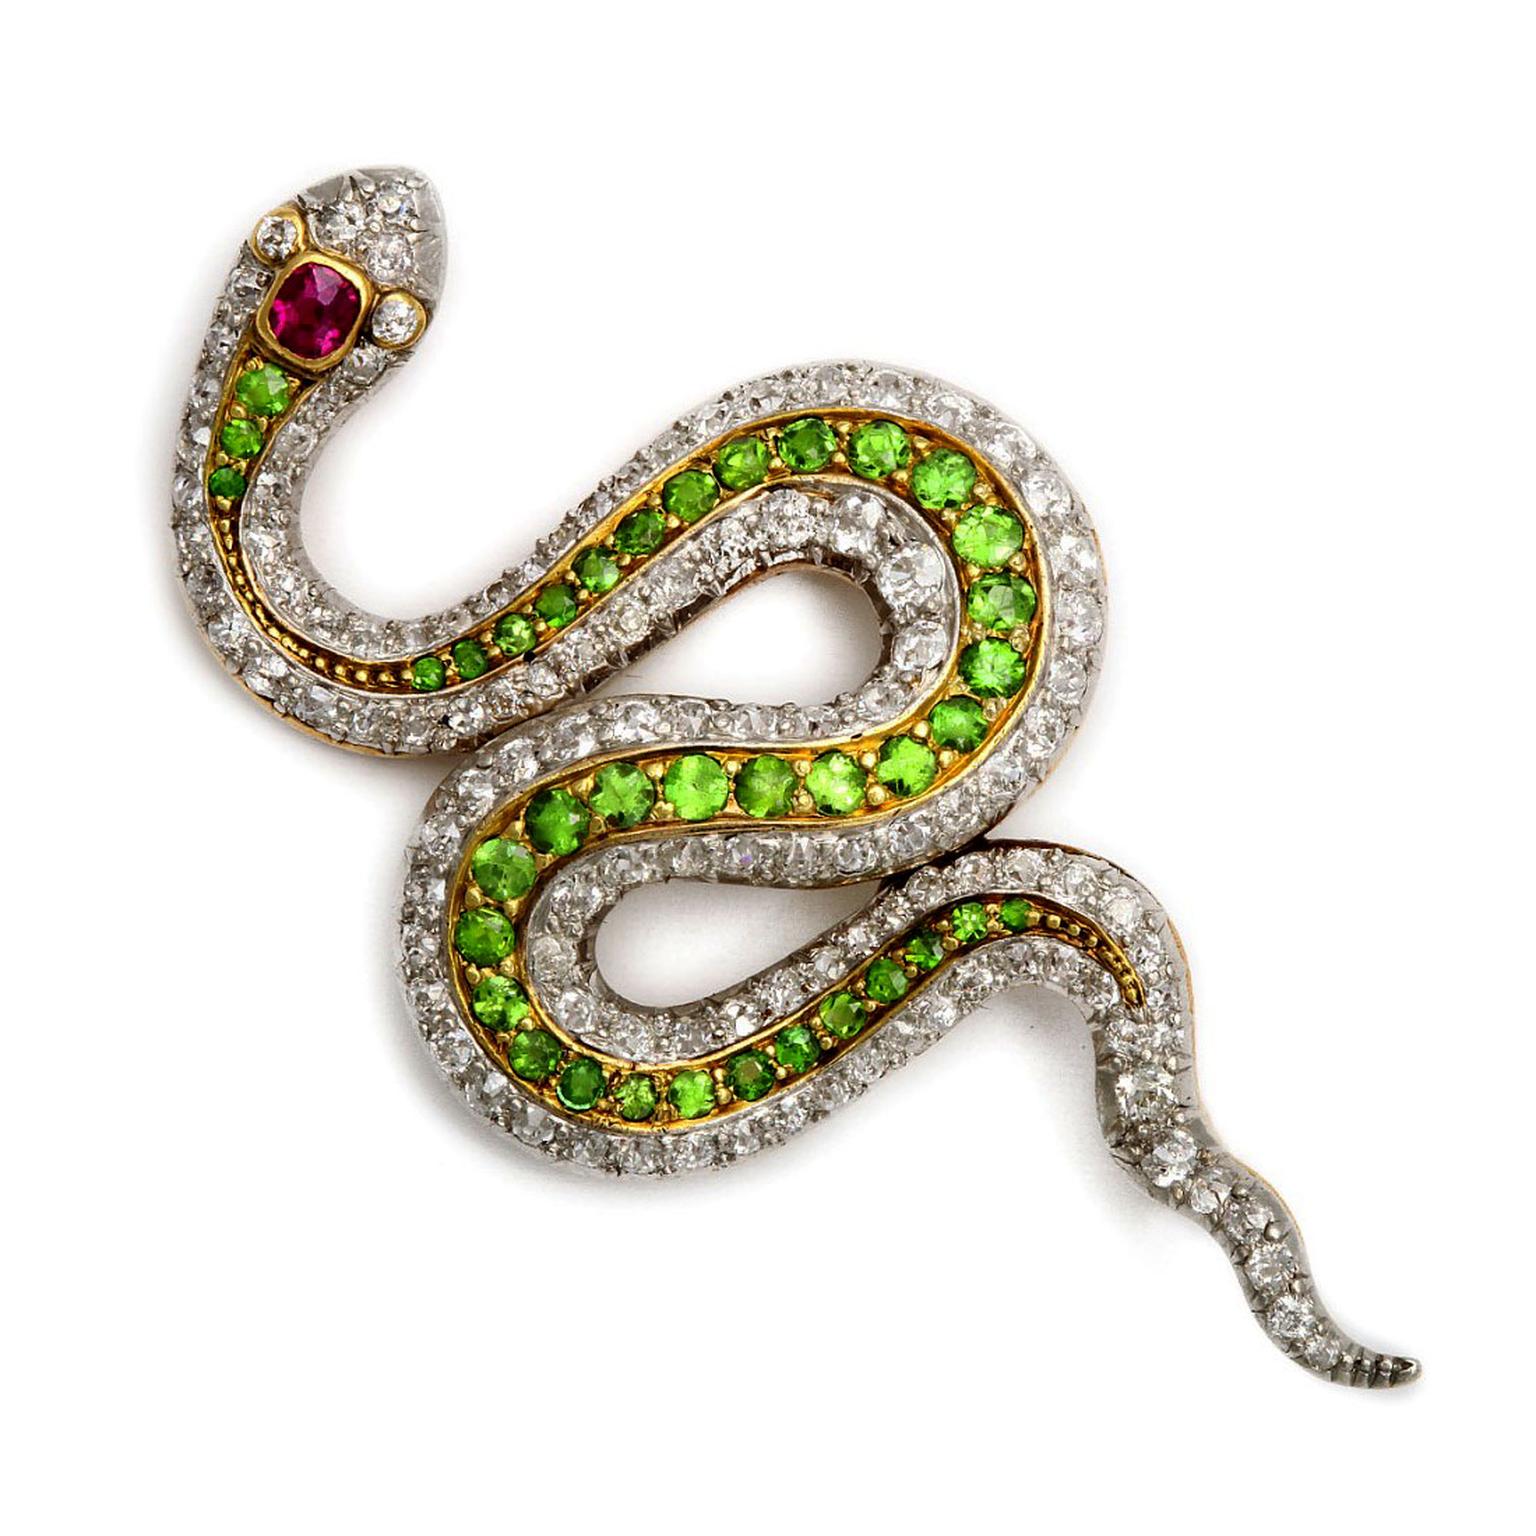 A La Vieille Russie American Victorian snake brooch